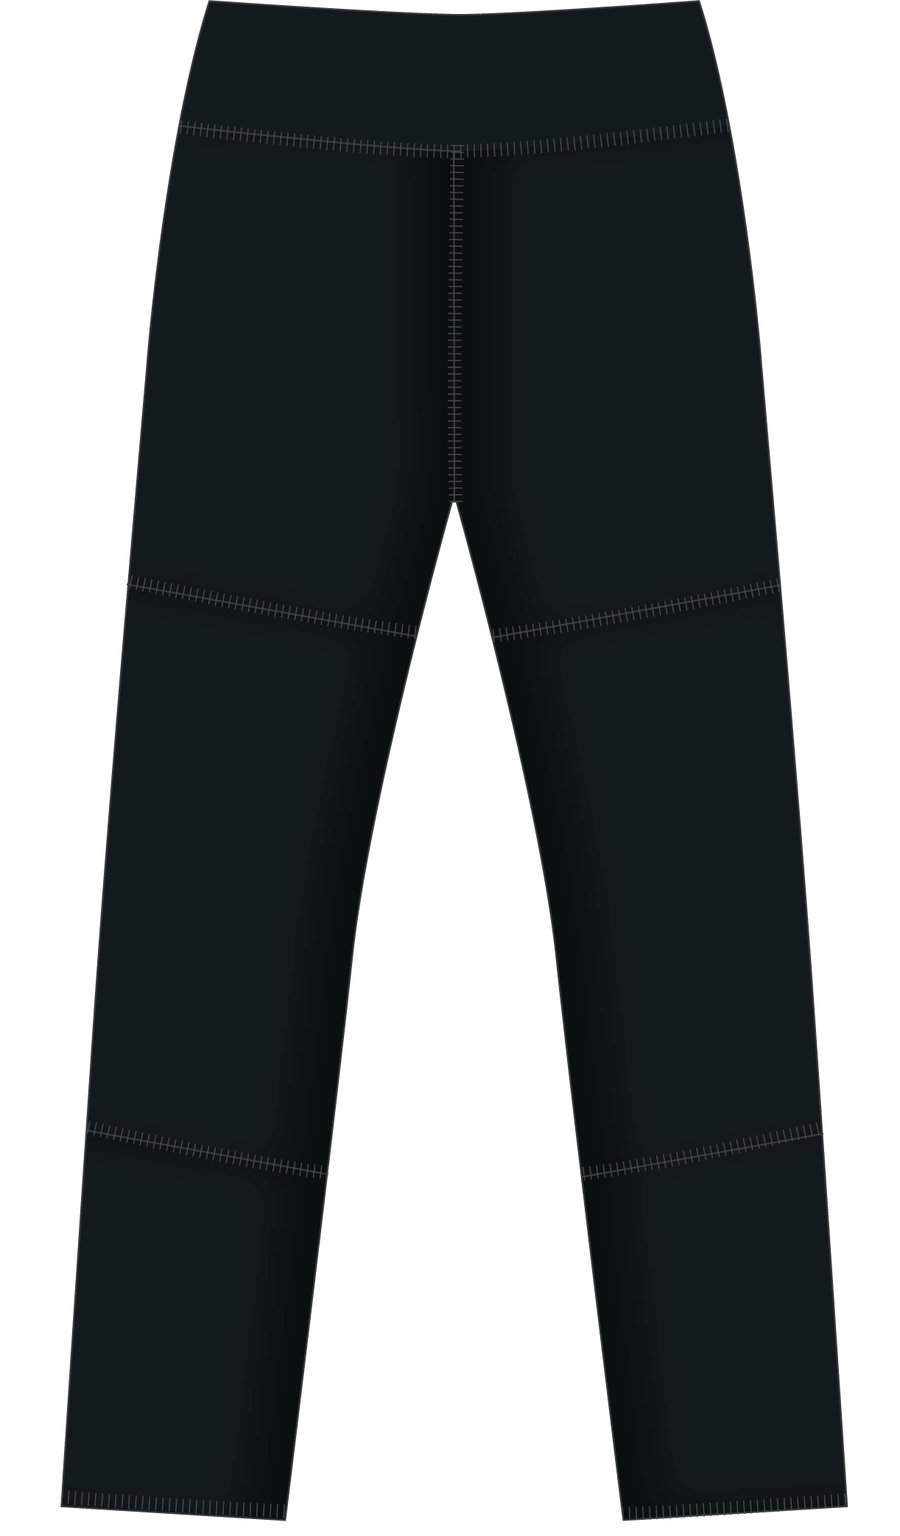 Image of Tamarack Skin Protection Pants with GlideWear TM technology